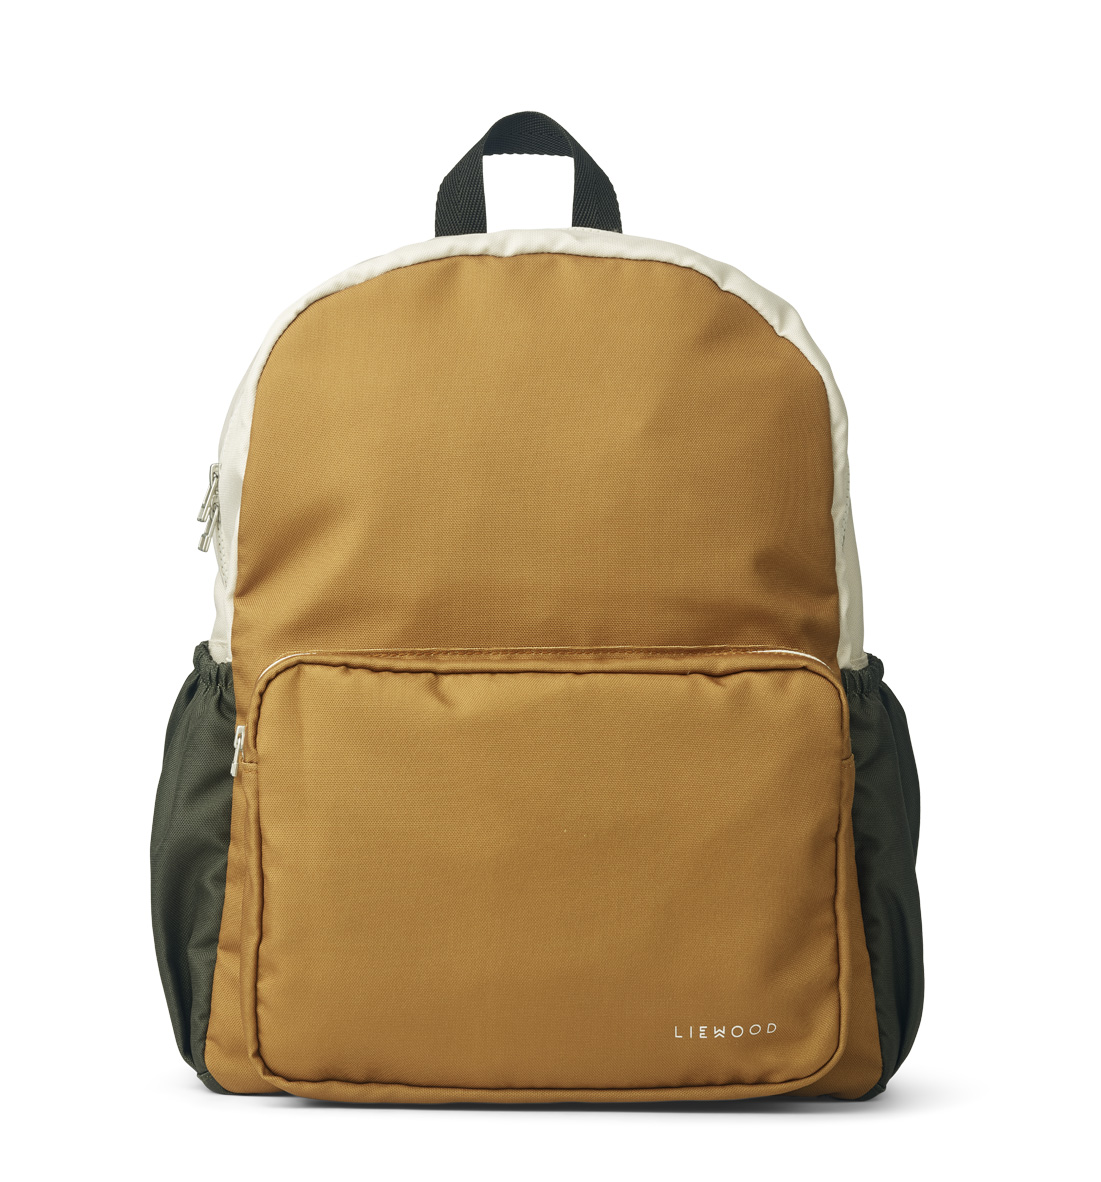 James school backpack - Golden caramel multimix